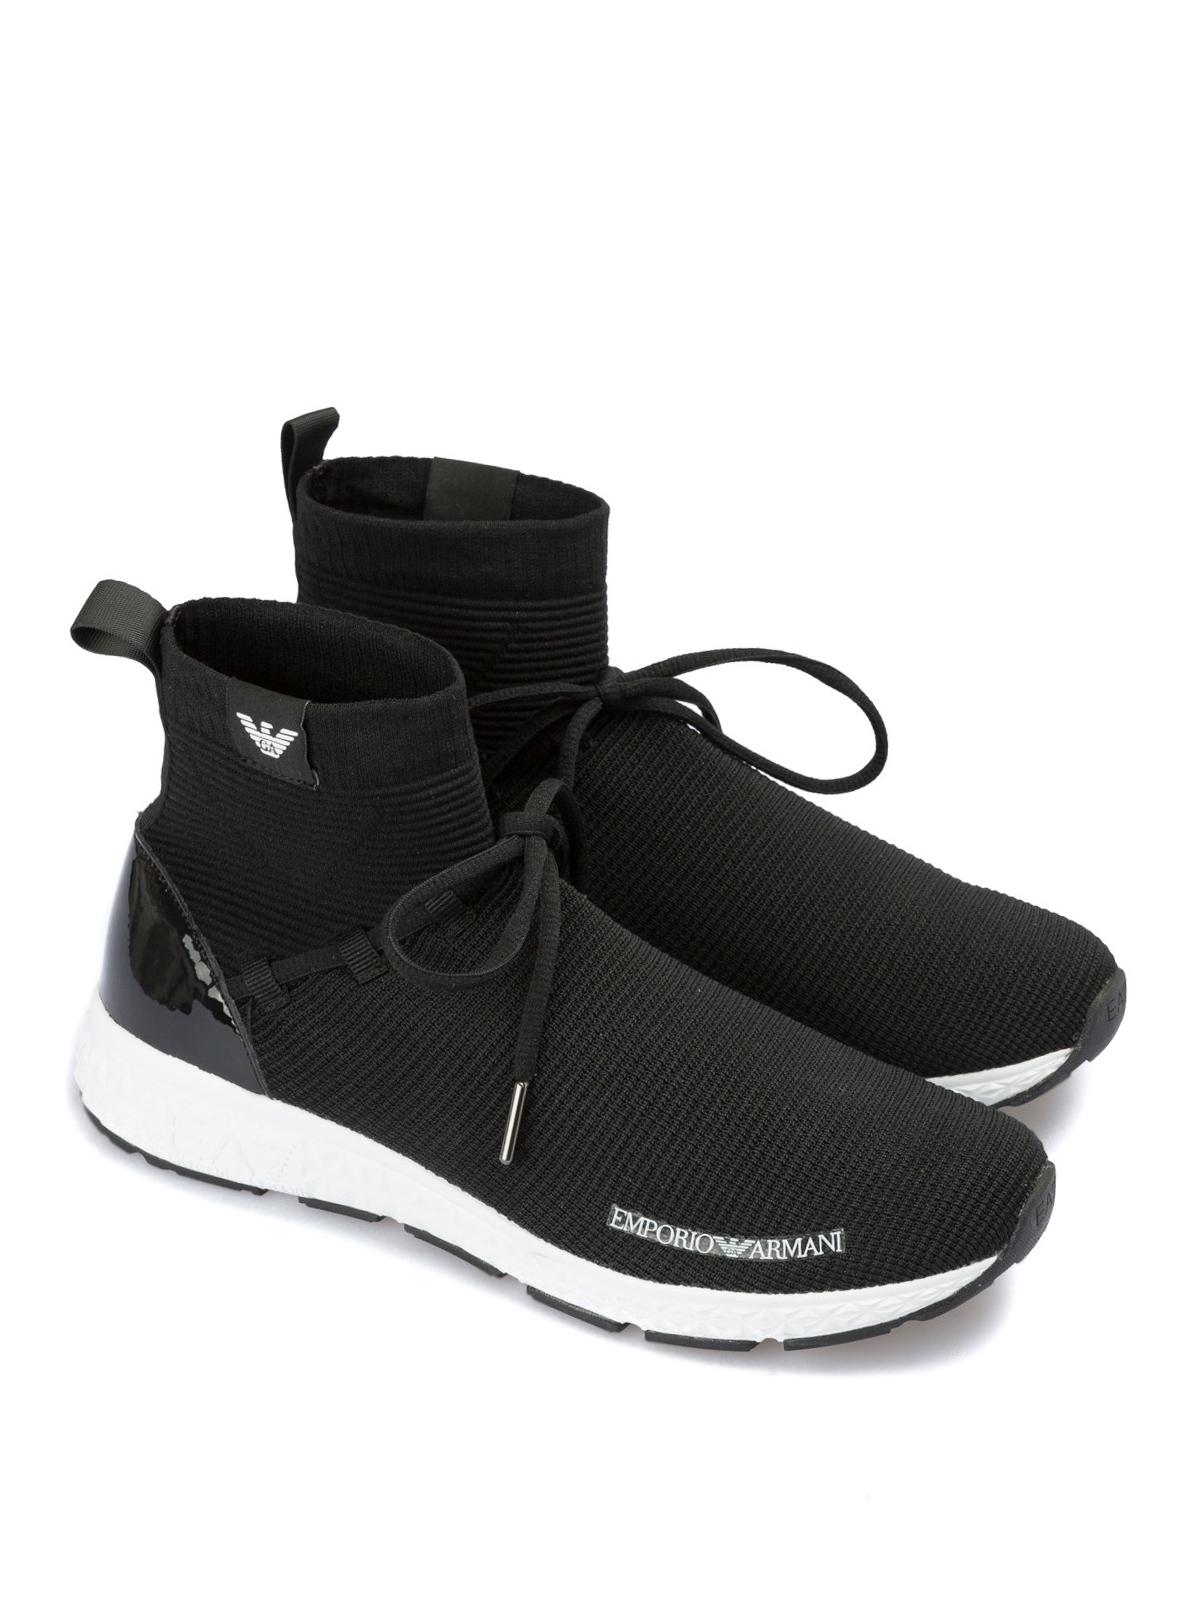 Emporio Armani Neoprene High-top Sock Sneakers in Black - Lyst